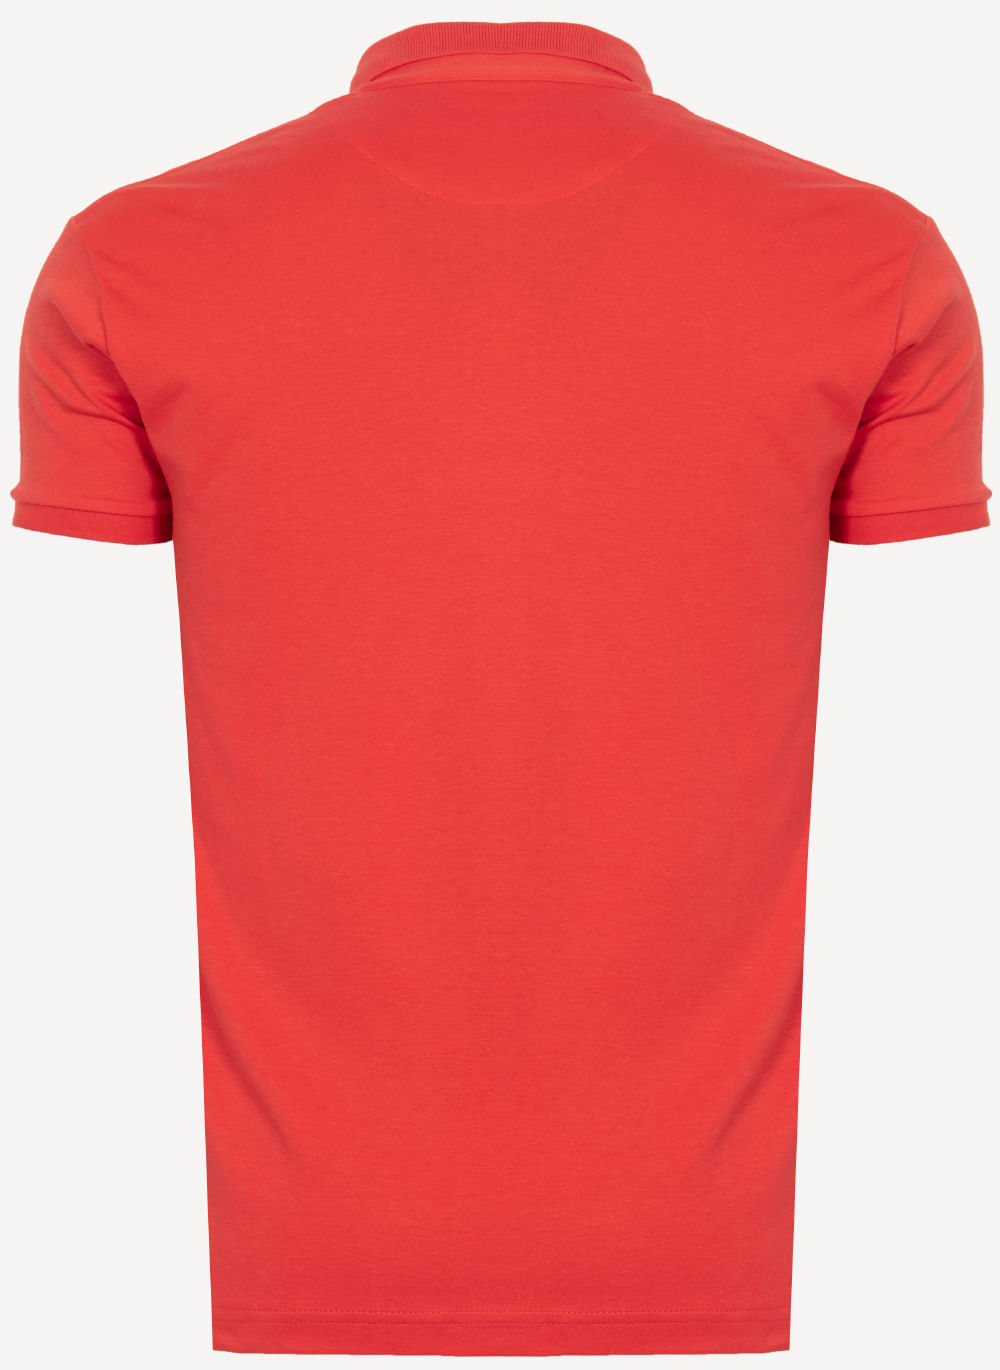 Camisa-Polo-Aleatory-lisa-Algodao-Pima-Vermelho-Claro-Vermelho-P